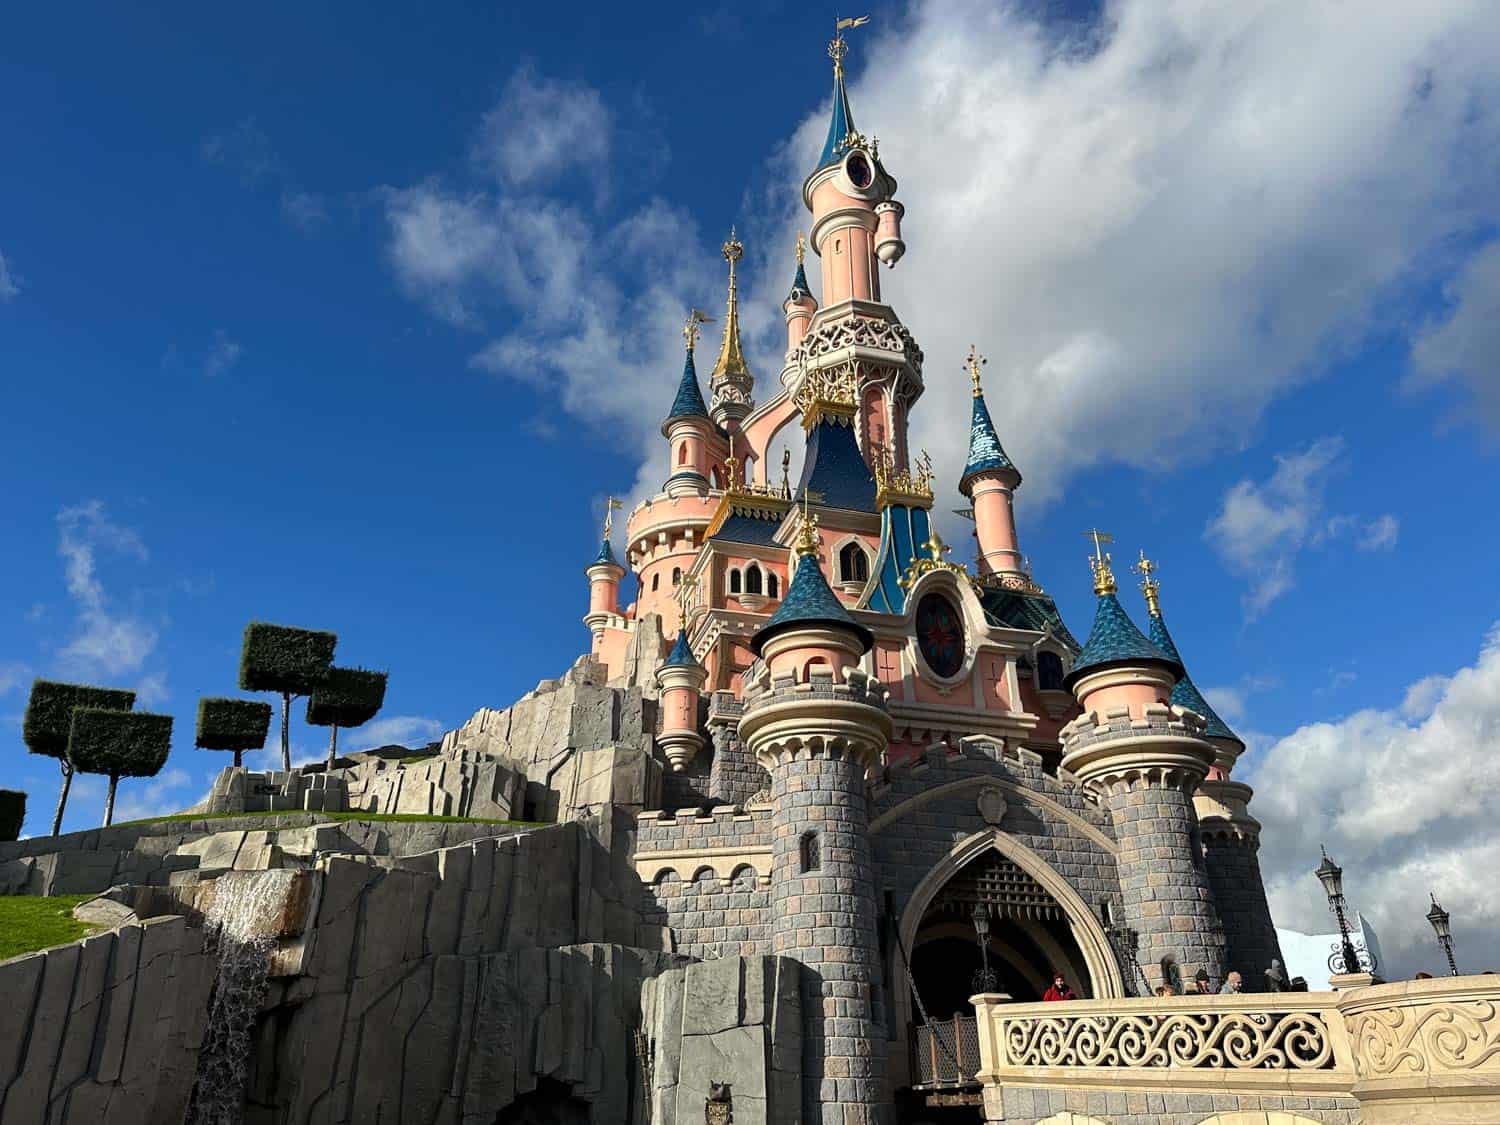 Disneyland Paris Sleeping Beauty Castle